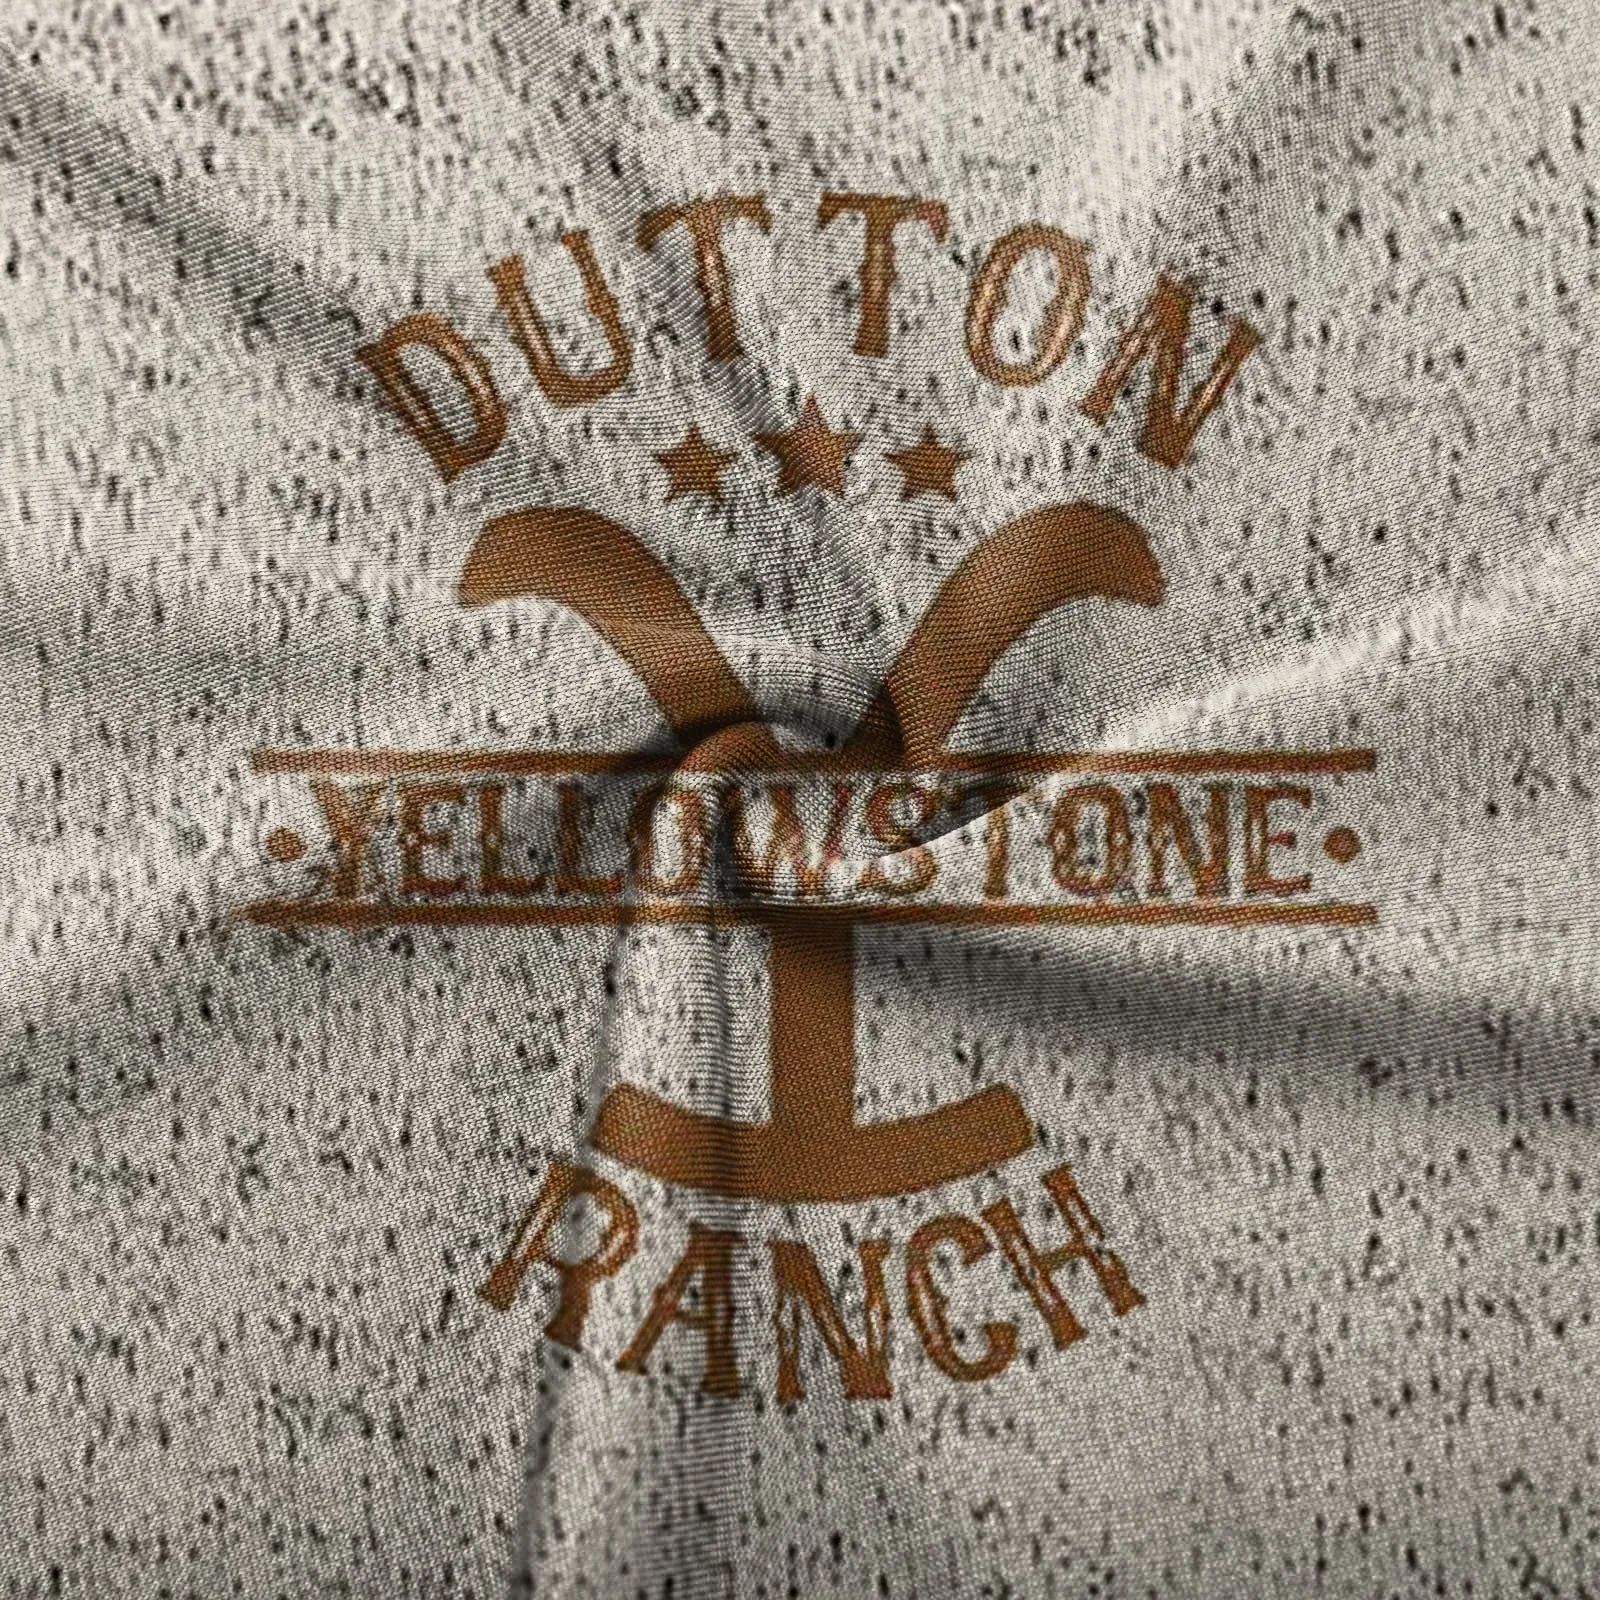 Yellowstone Dutton Ranch Yellowstone Relationships TV Bat Celebrity Hoodie Sweatshirts Women Yellowstone Park Printed Sweater long sleeve t shirts